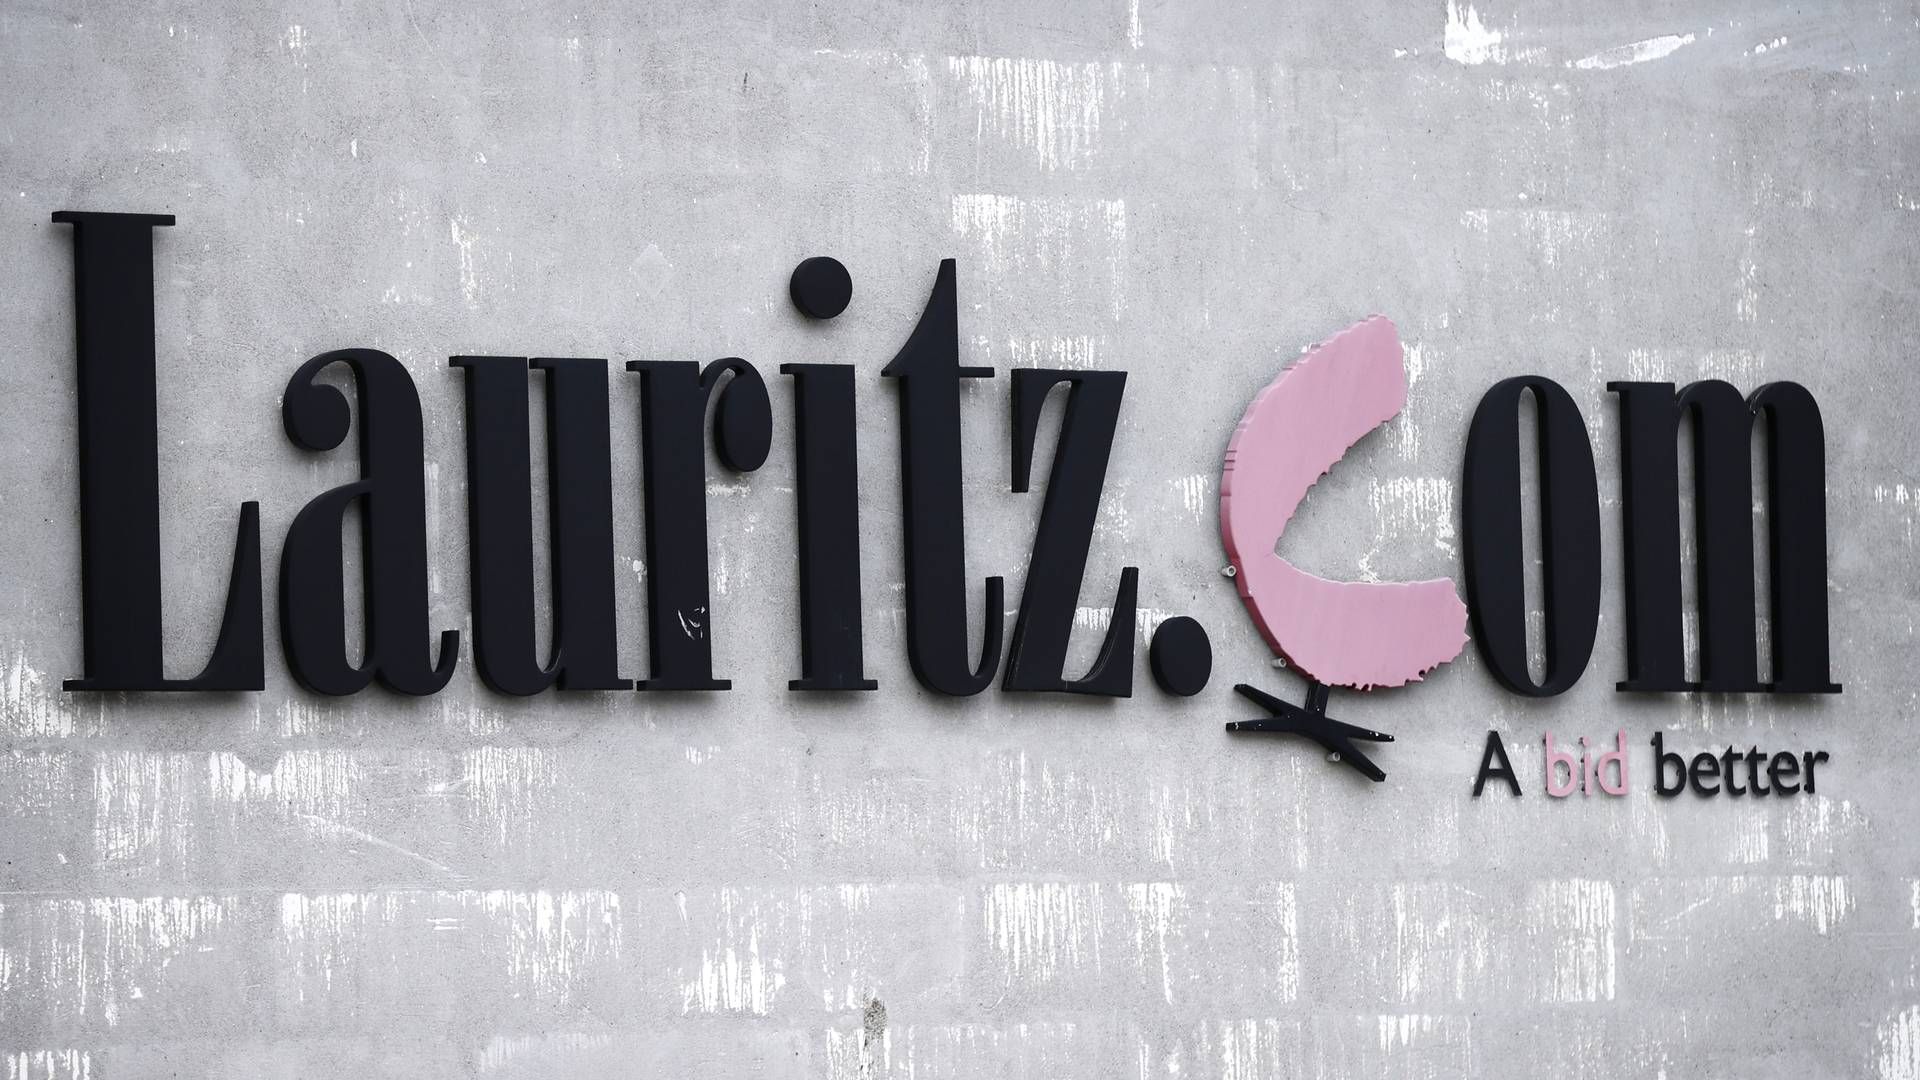 Lauritz.com gik konkurs i juli. | Foto: Jens Dresling